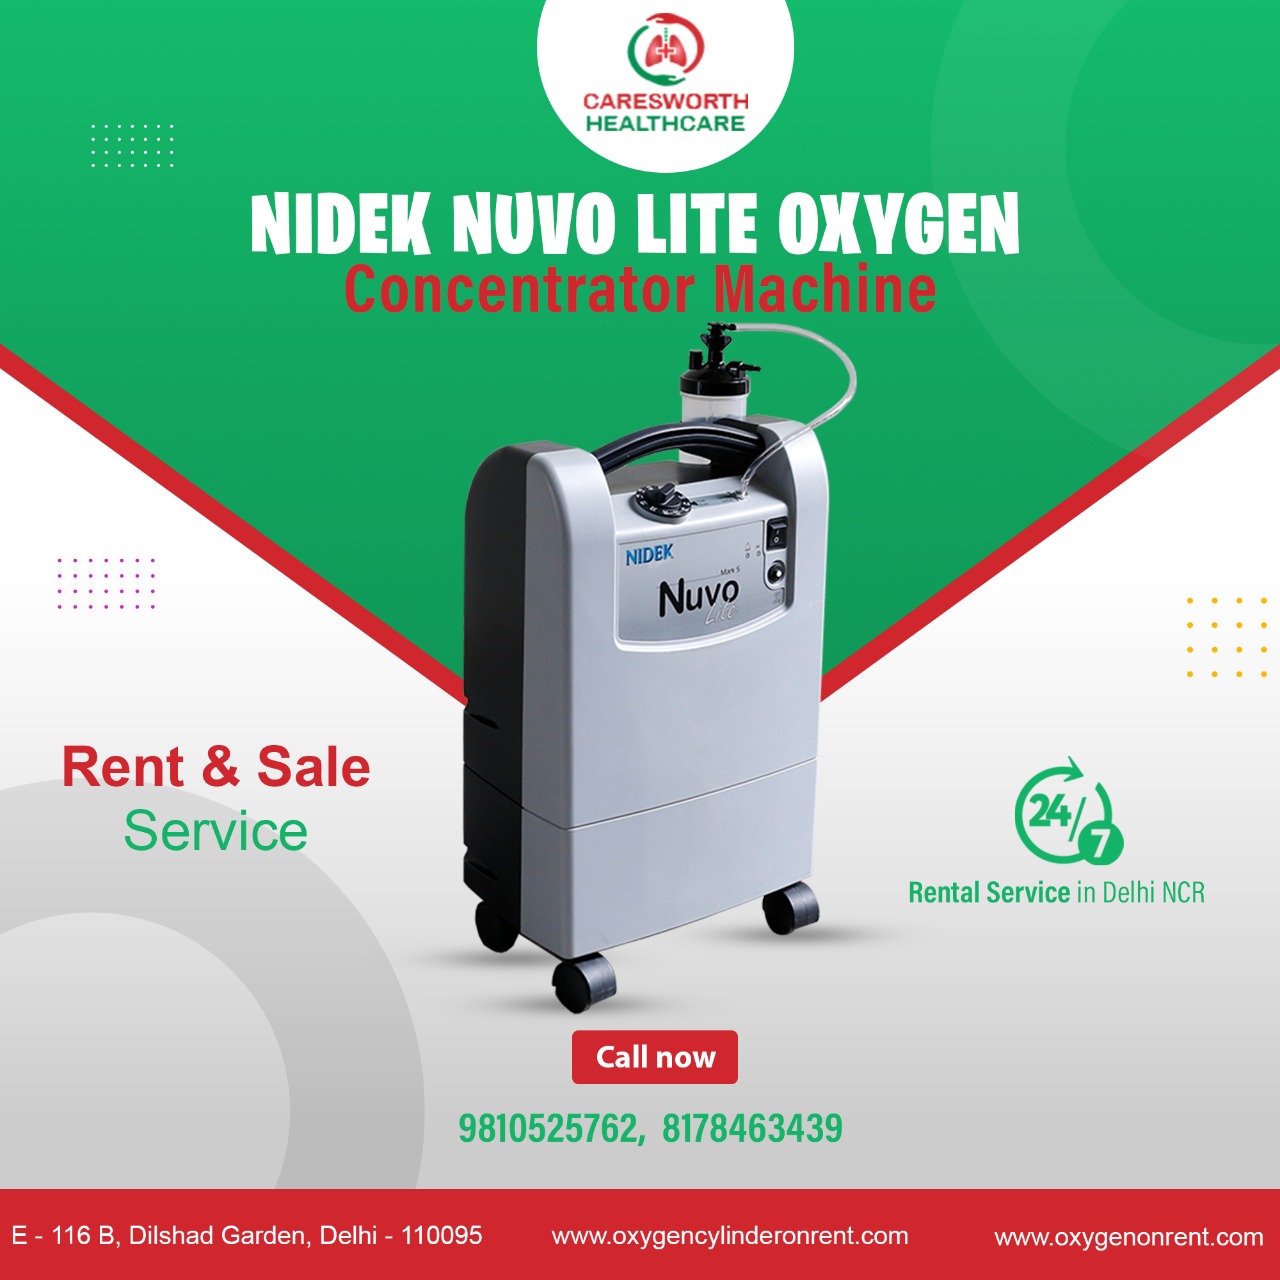 Nidek Nuvo Lite Oxygen Concentrator Machine Dealers